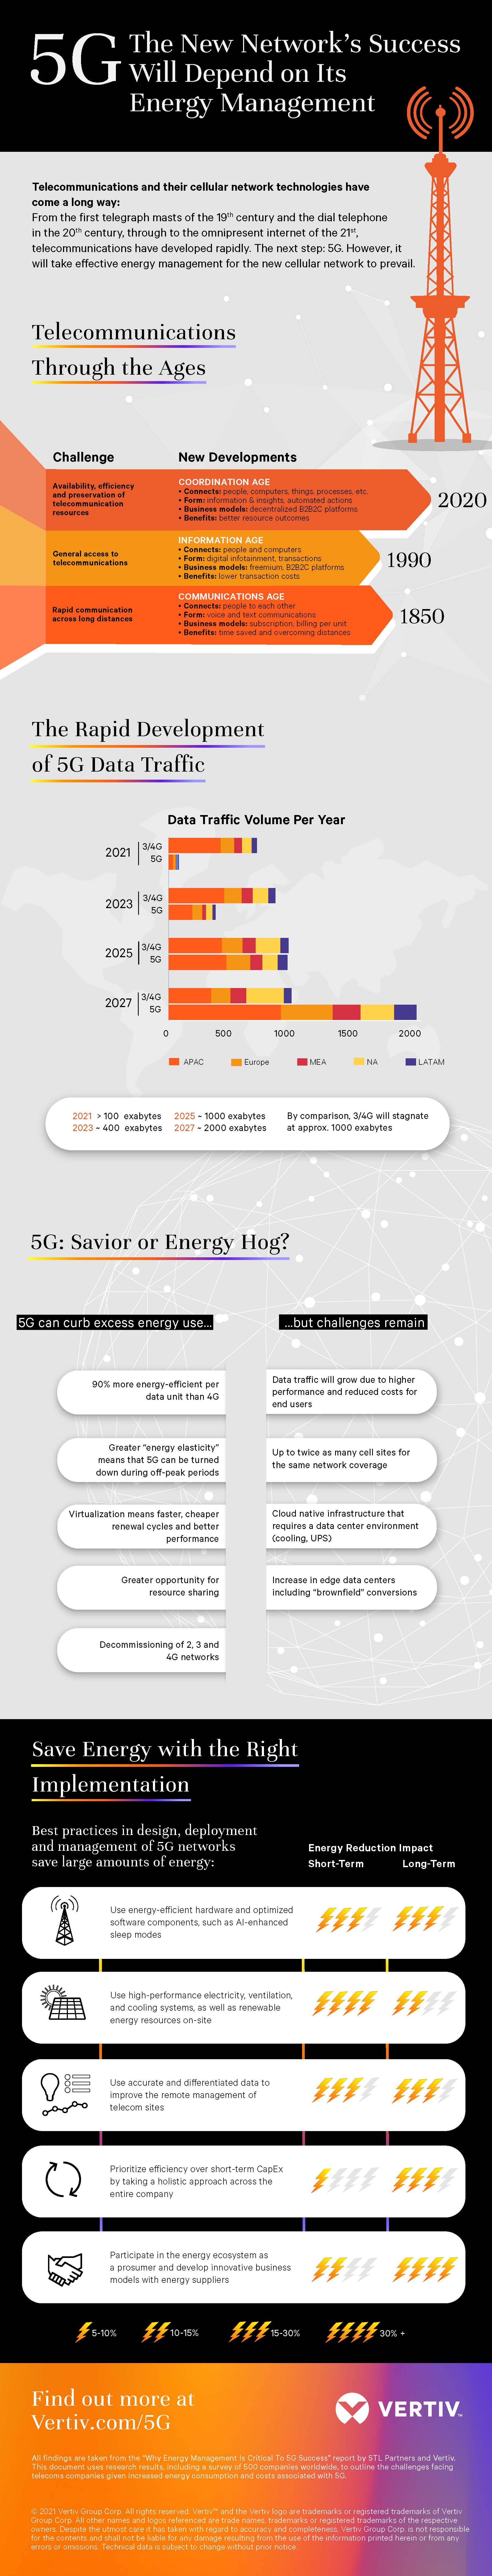 Vertiv 5G Infographic_US-IN-NA